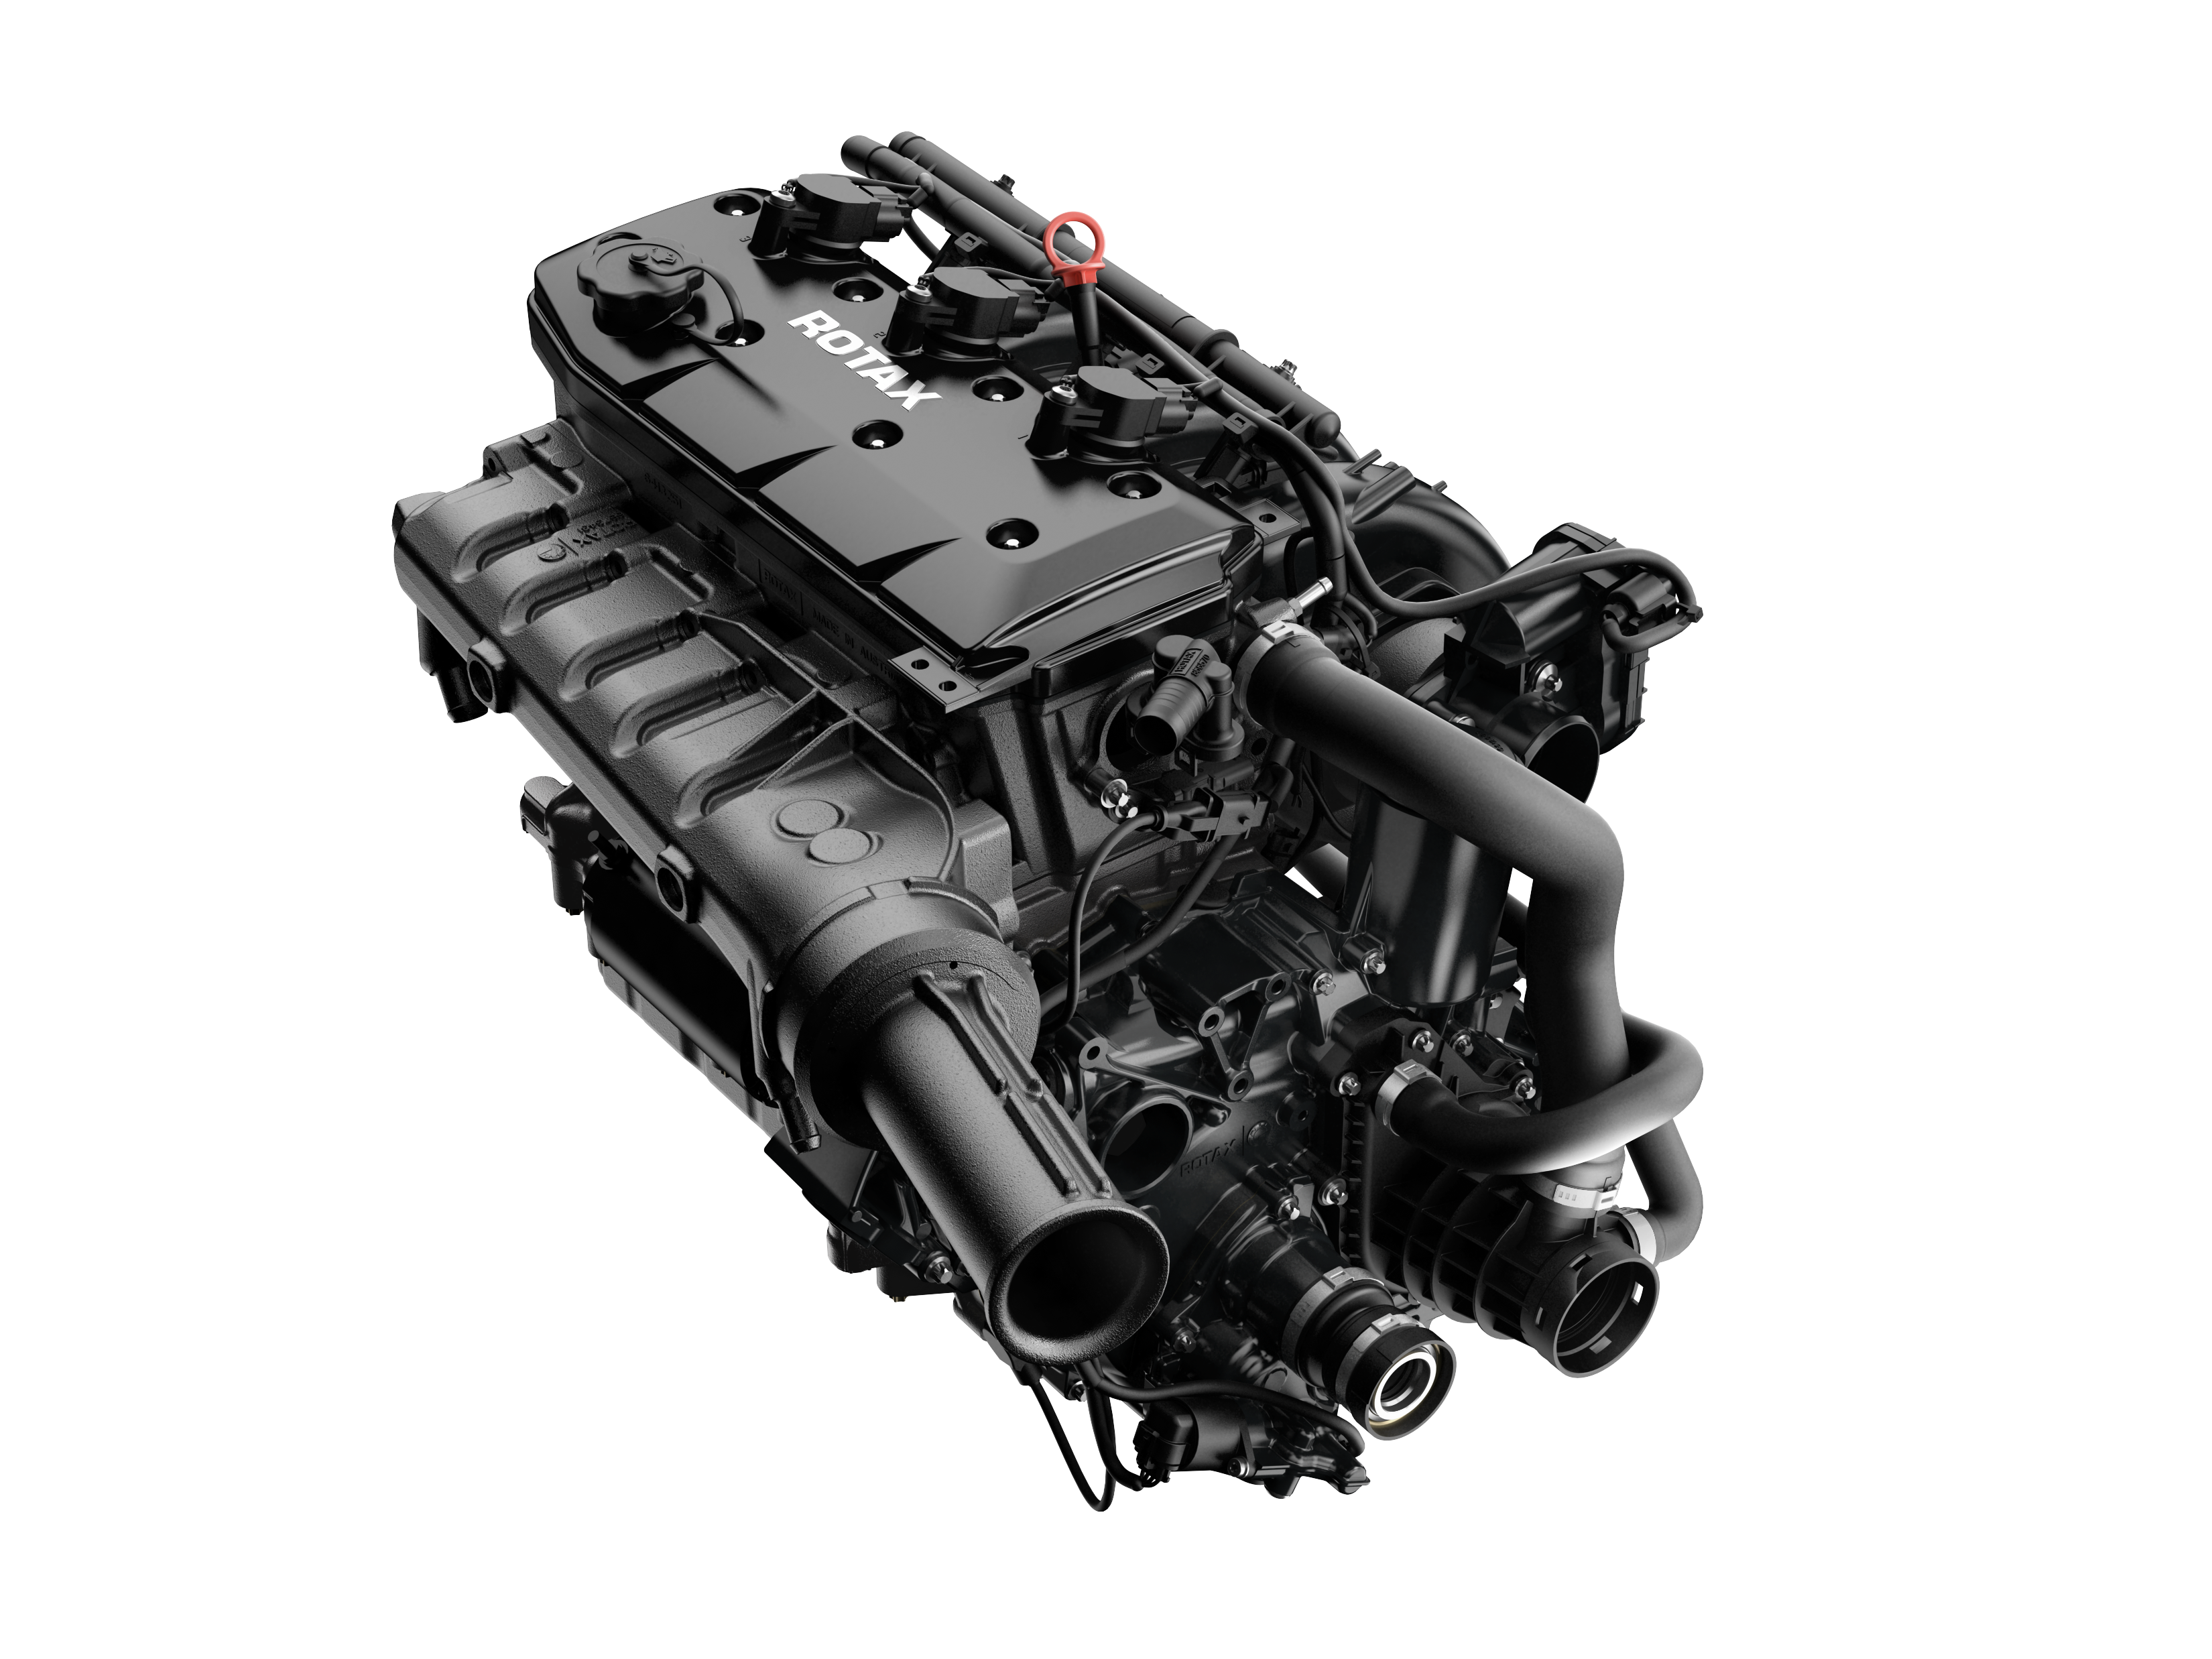 Motor Rotax 1630 - 170 HP